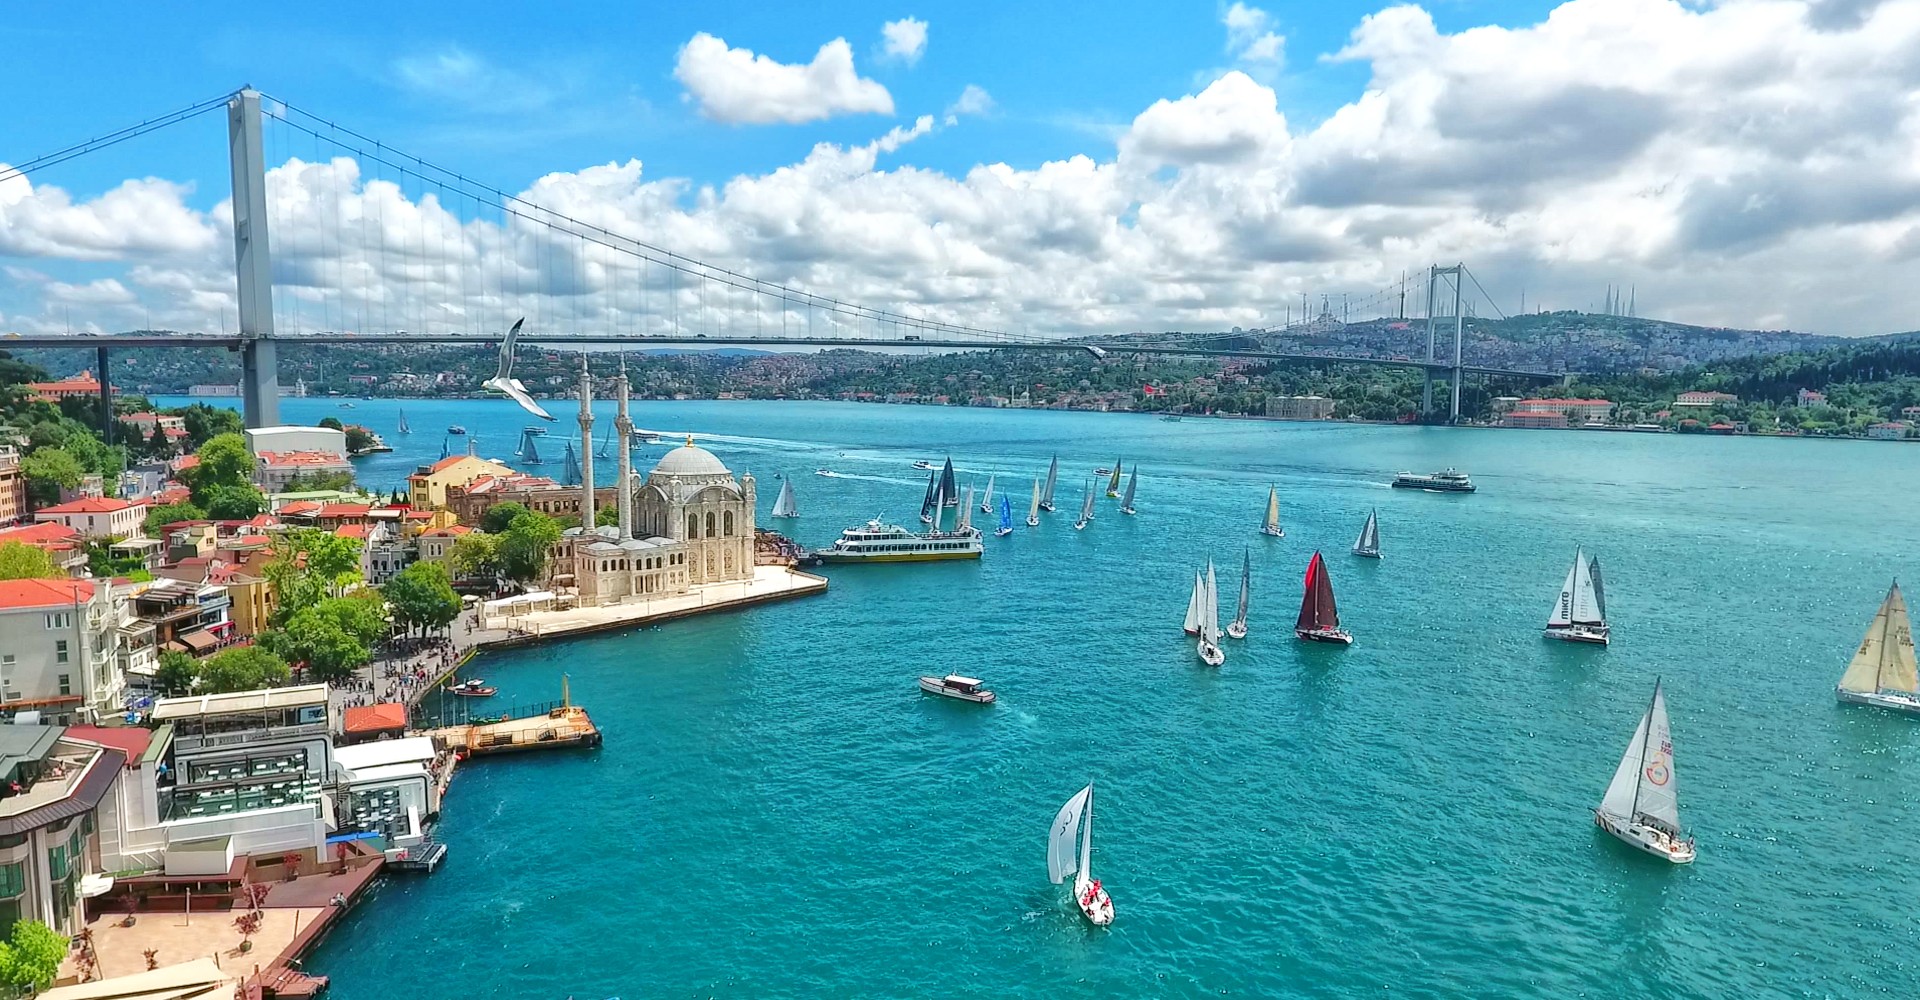 Turkey co. Босфор Турция Стамбул. Стамбул Босфорский пролив. Бухта золотой Рог Стамбул. Турция мост Босфор.